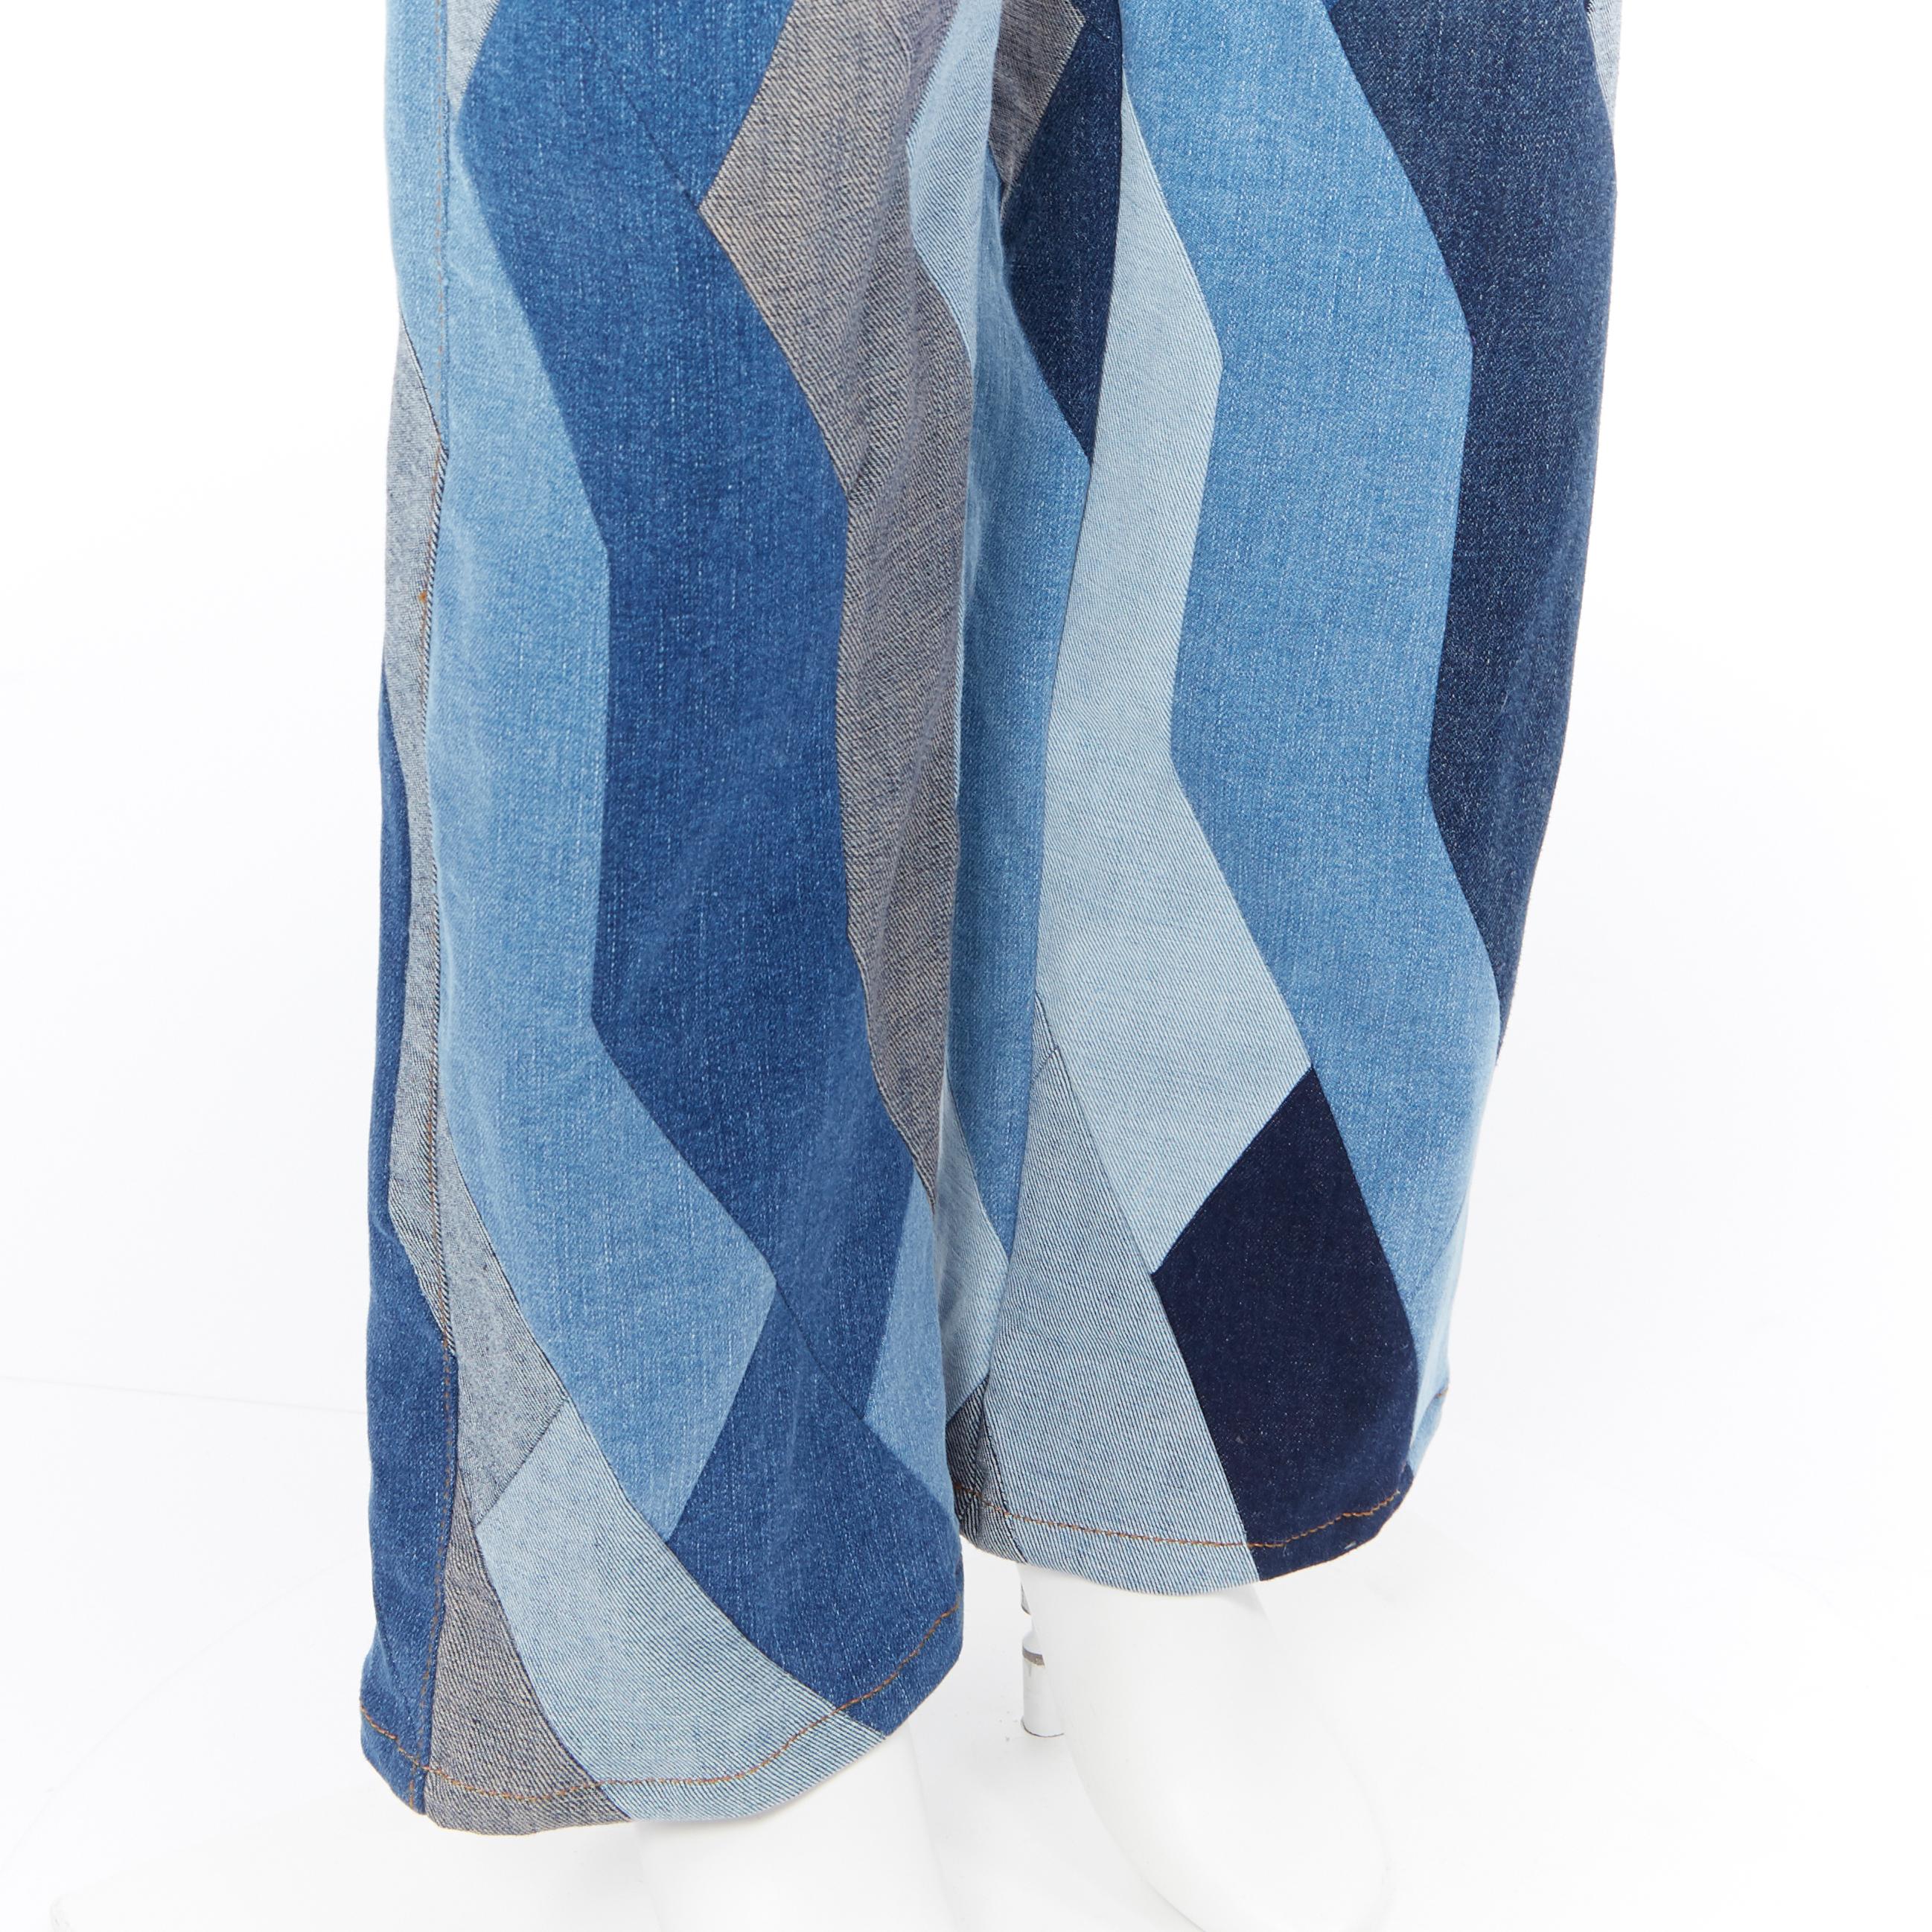 Women's runway DRIES VAN NOTEN AW17 blue patchwork straight-leg denim jeans pants 29